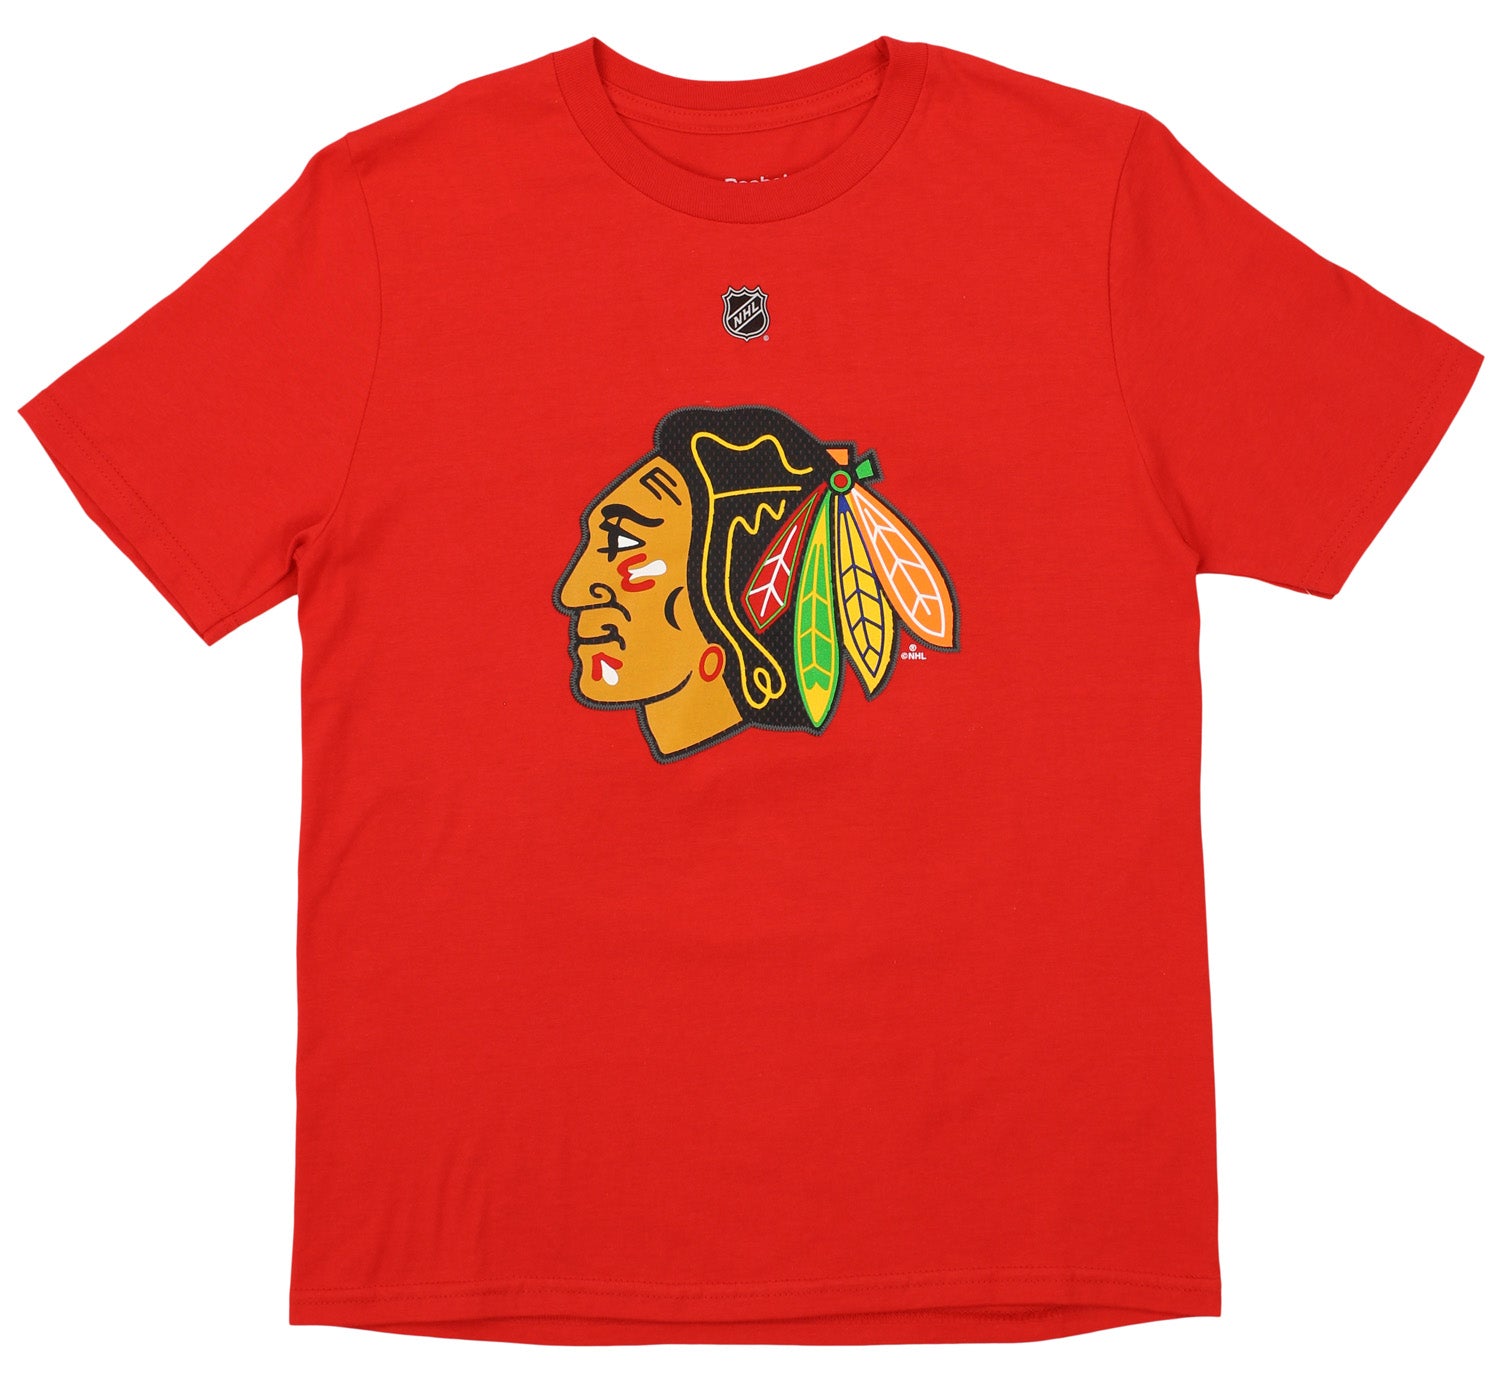 Marian Hossa #81 Chicago Blackhawks Reebok Youth High Definition Shirt